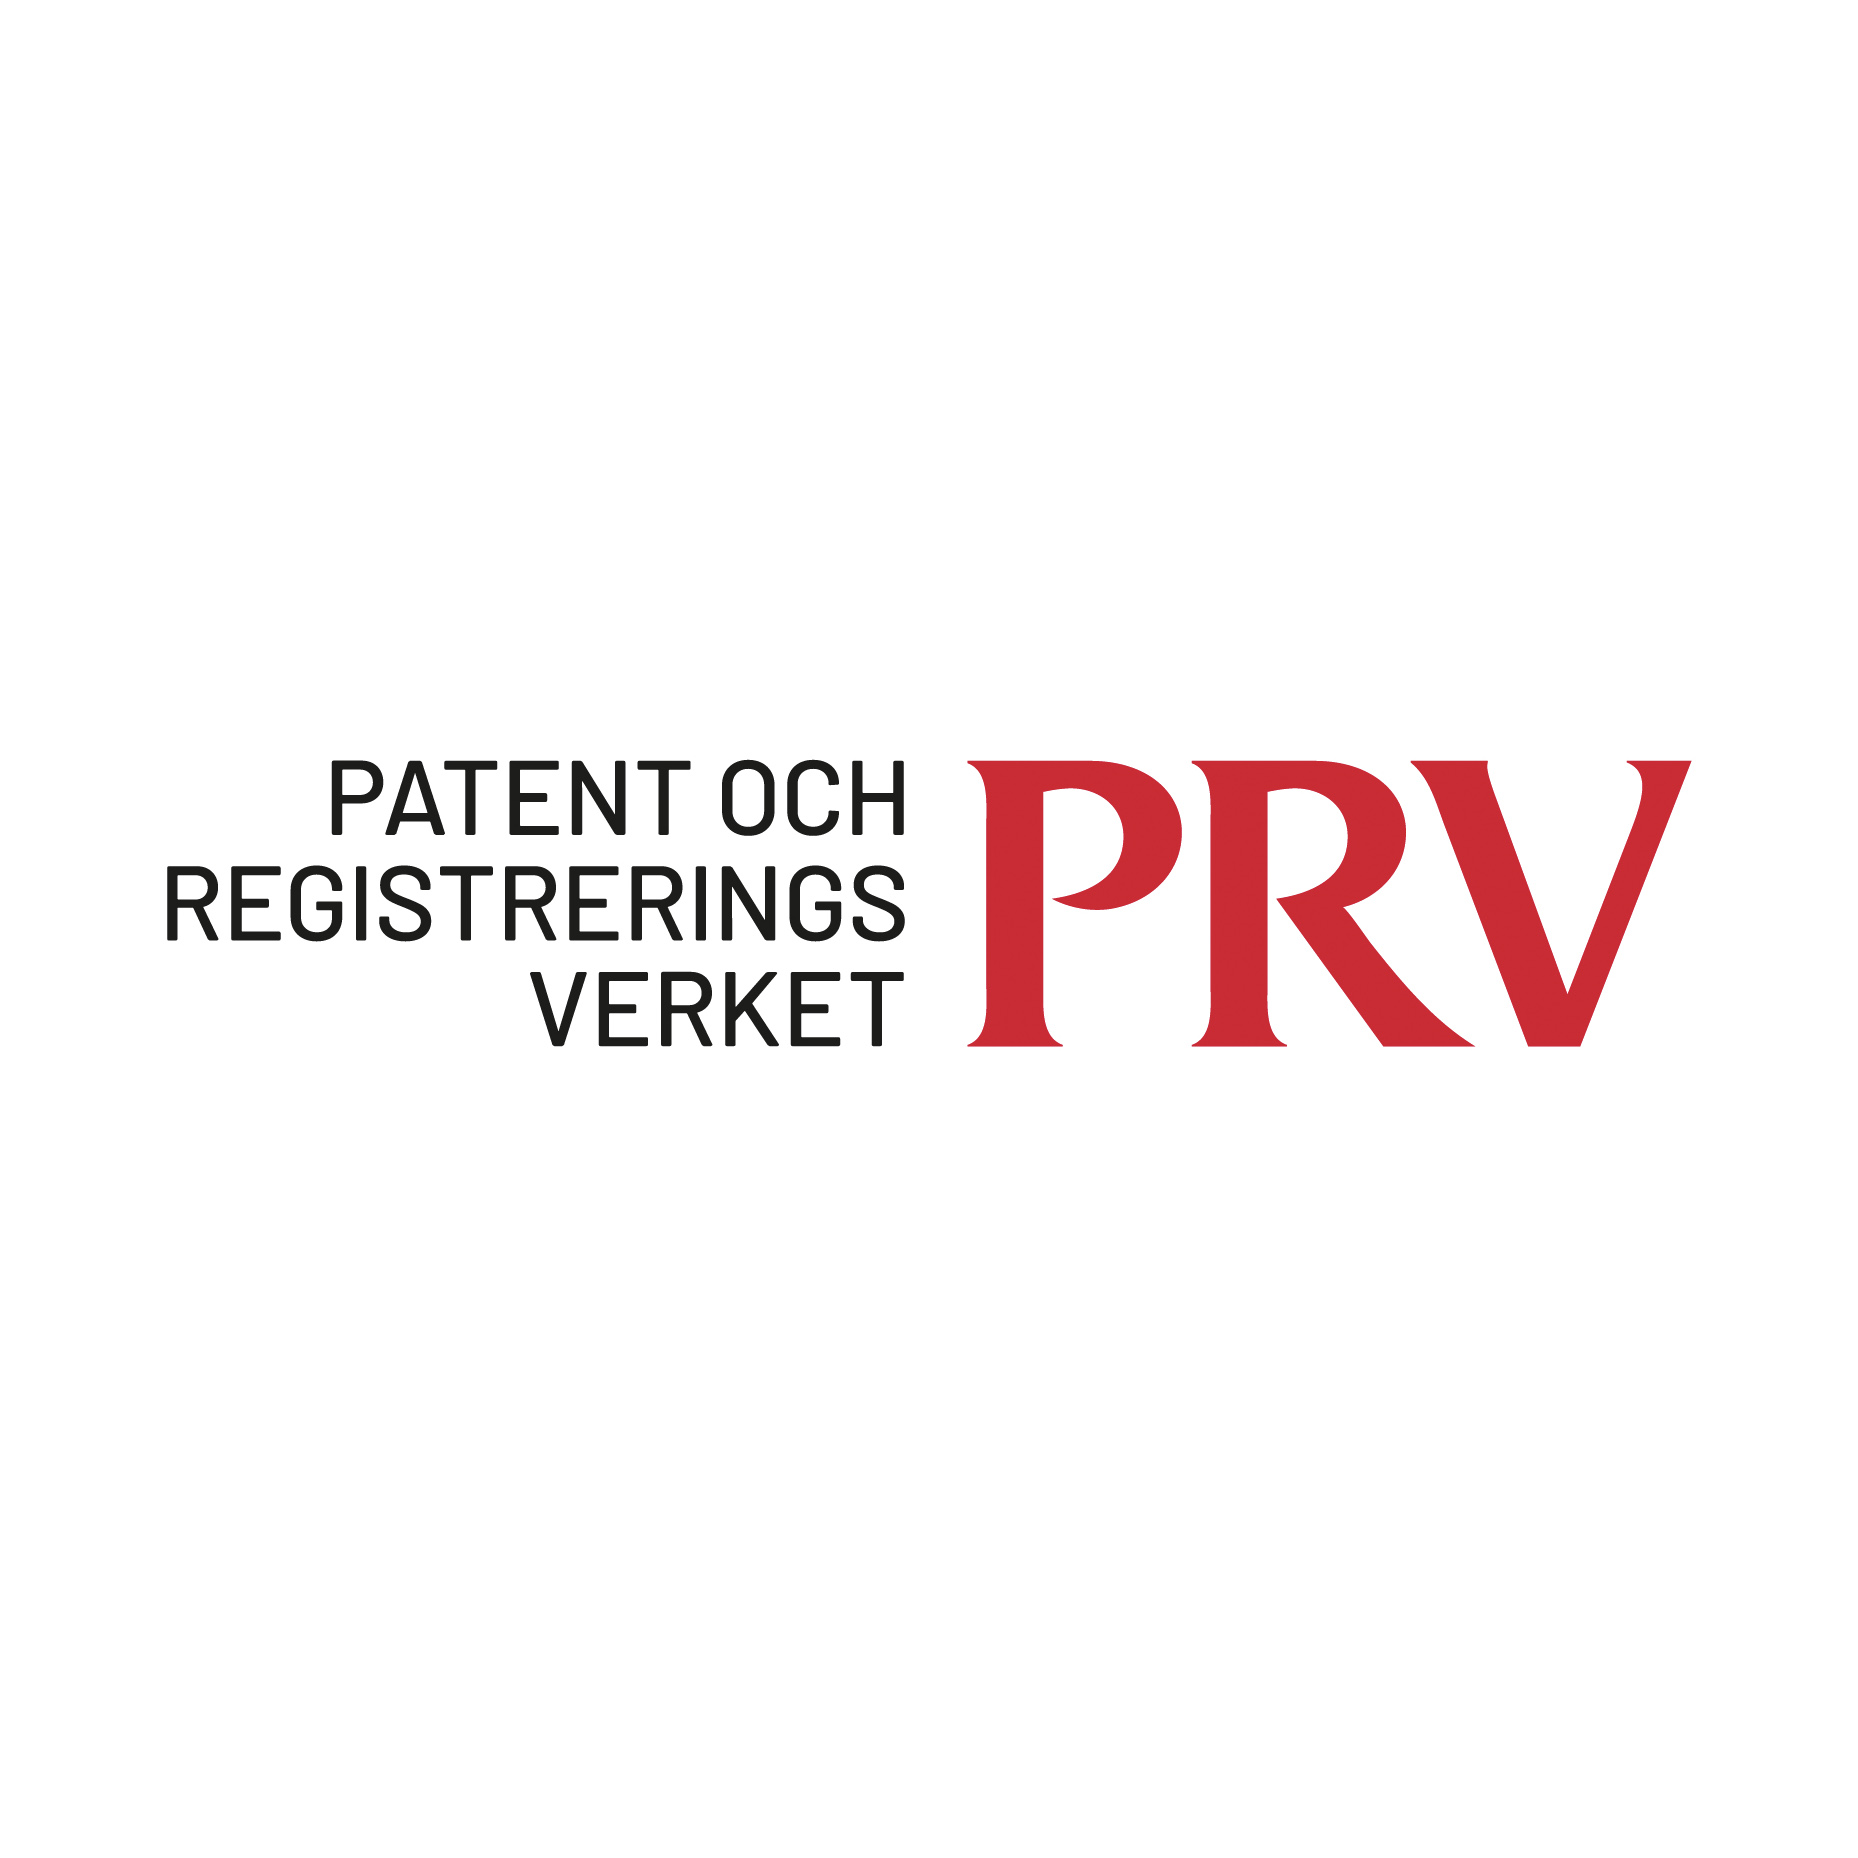 PRV - Patent- och registreringsverket